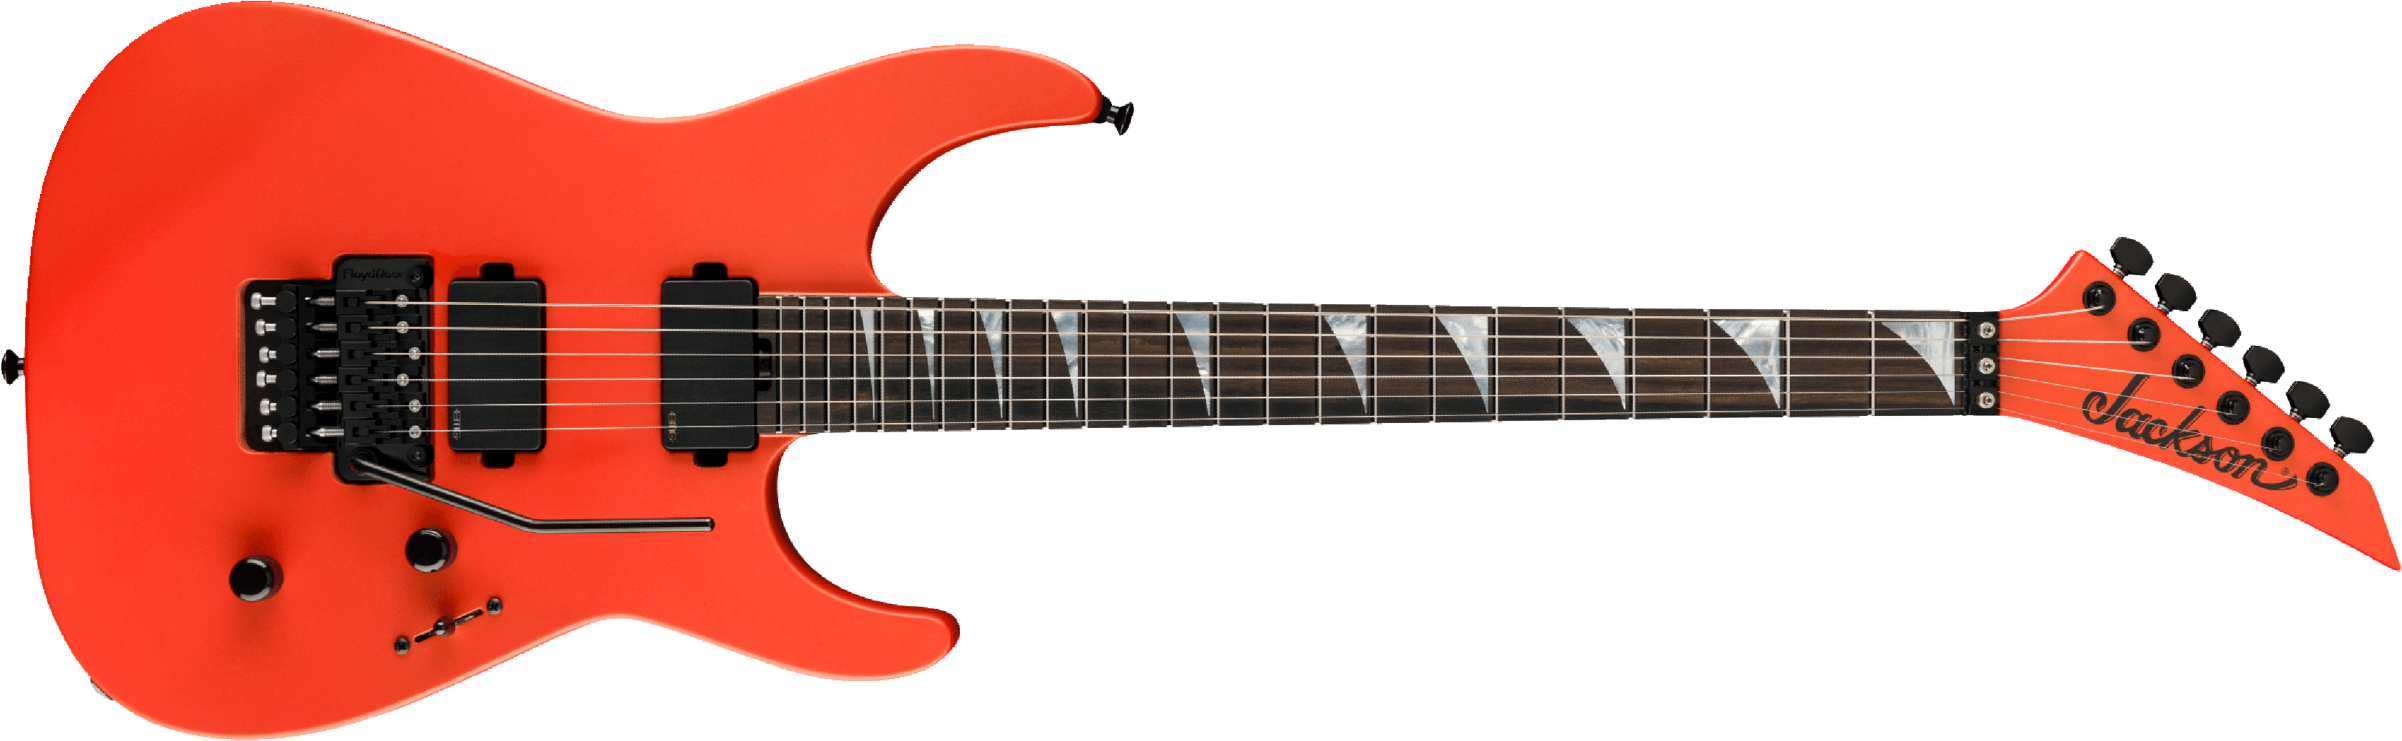 Jackson Sl2mg American Soloist Trem Hh Eb - Satin Lambo Orange - Metal electric guitar - Main picture